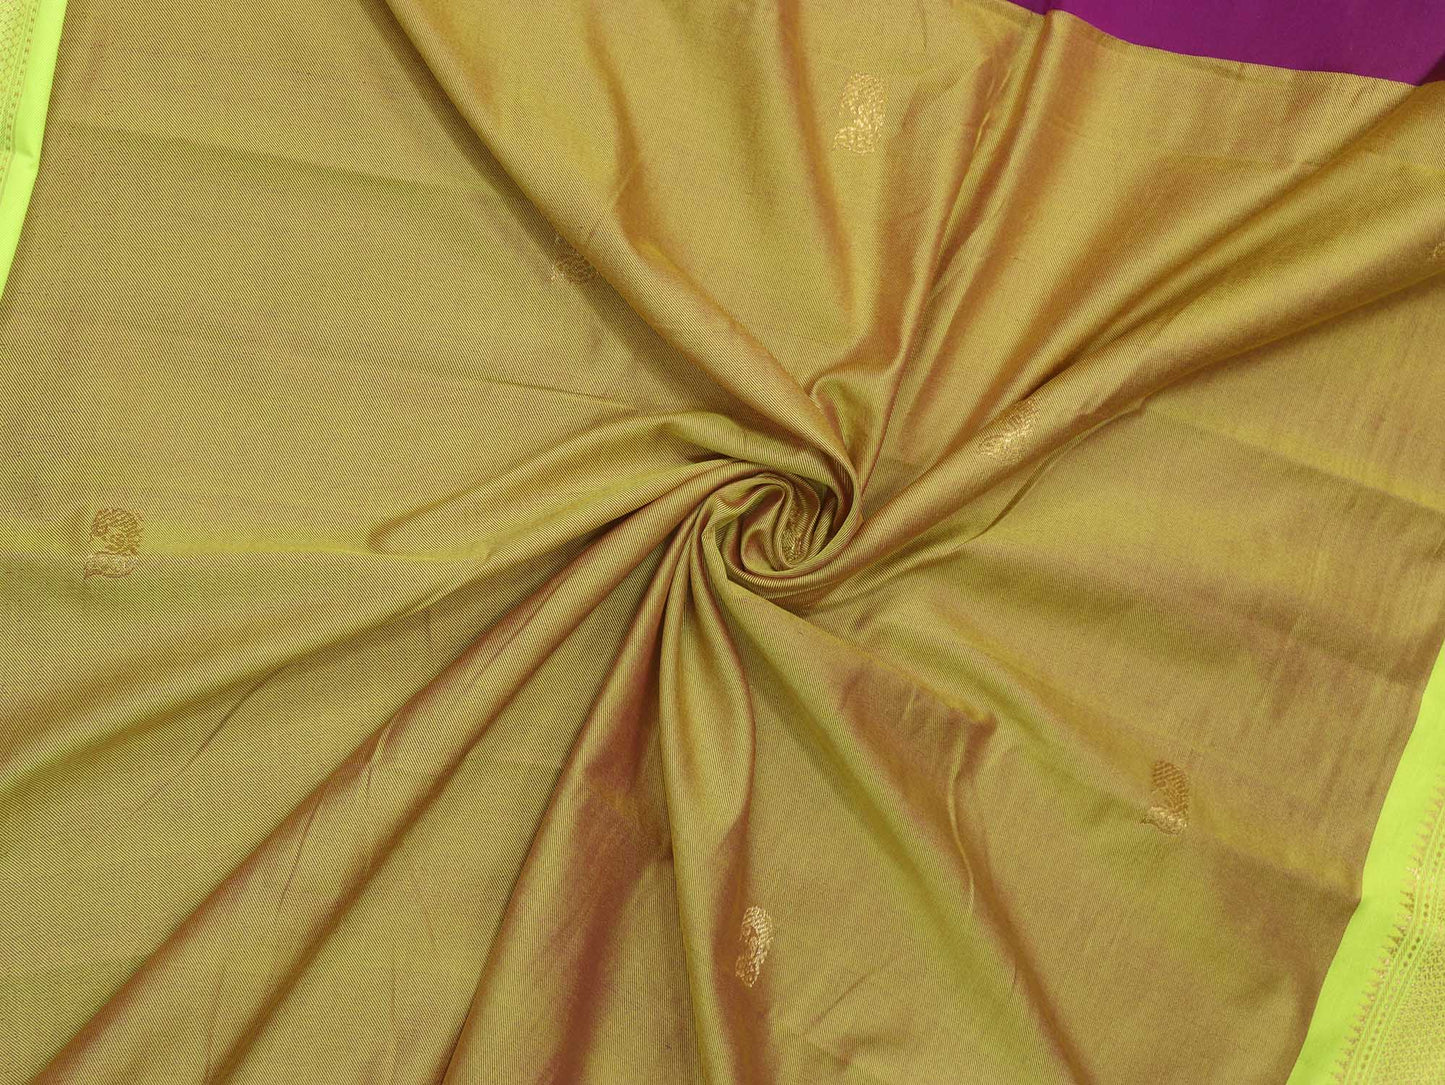 Purple Paithani Cotton Silk Saree - divyaindia 